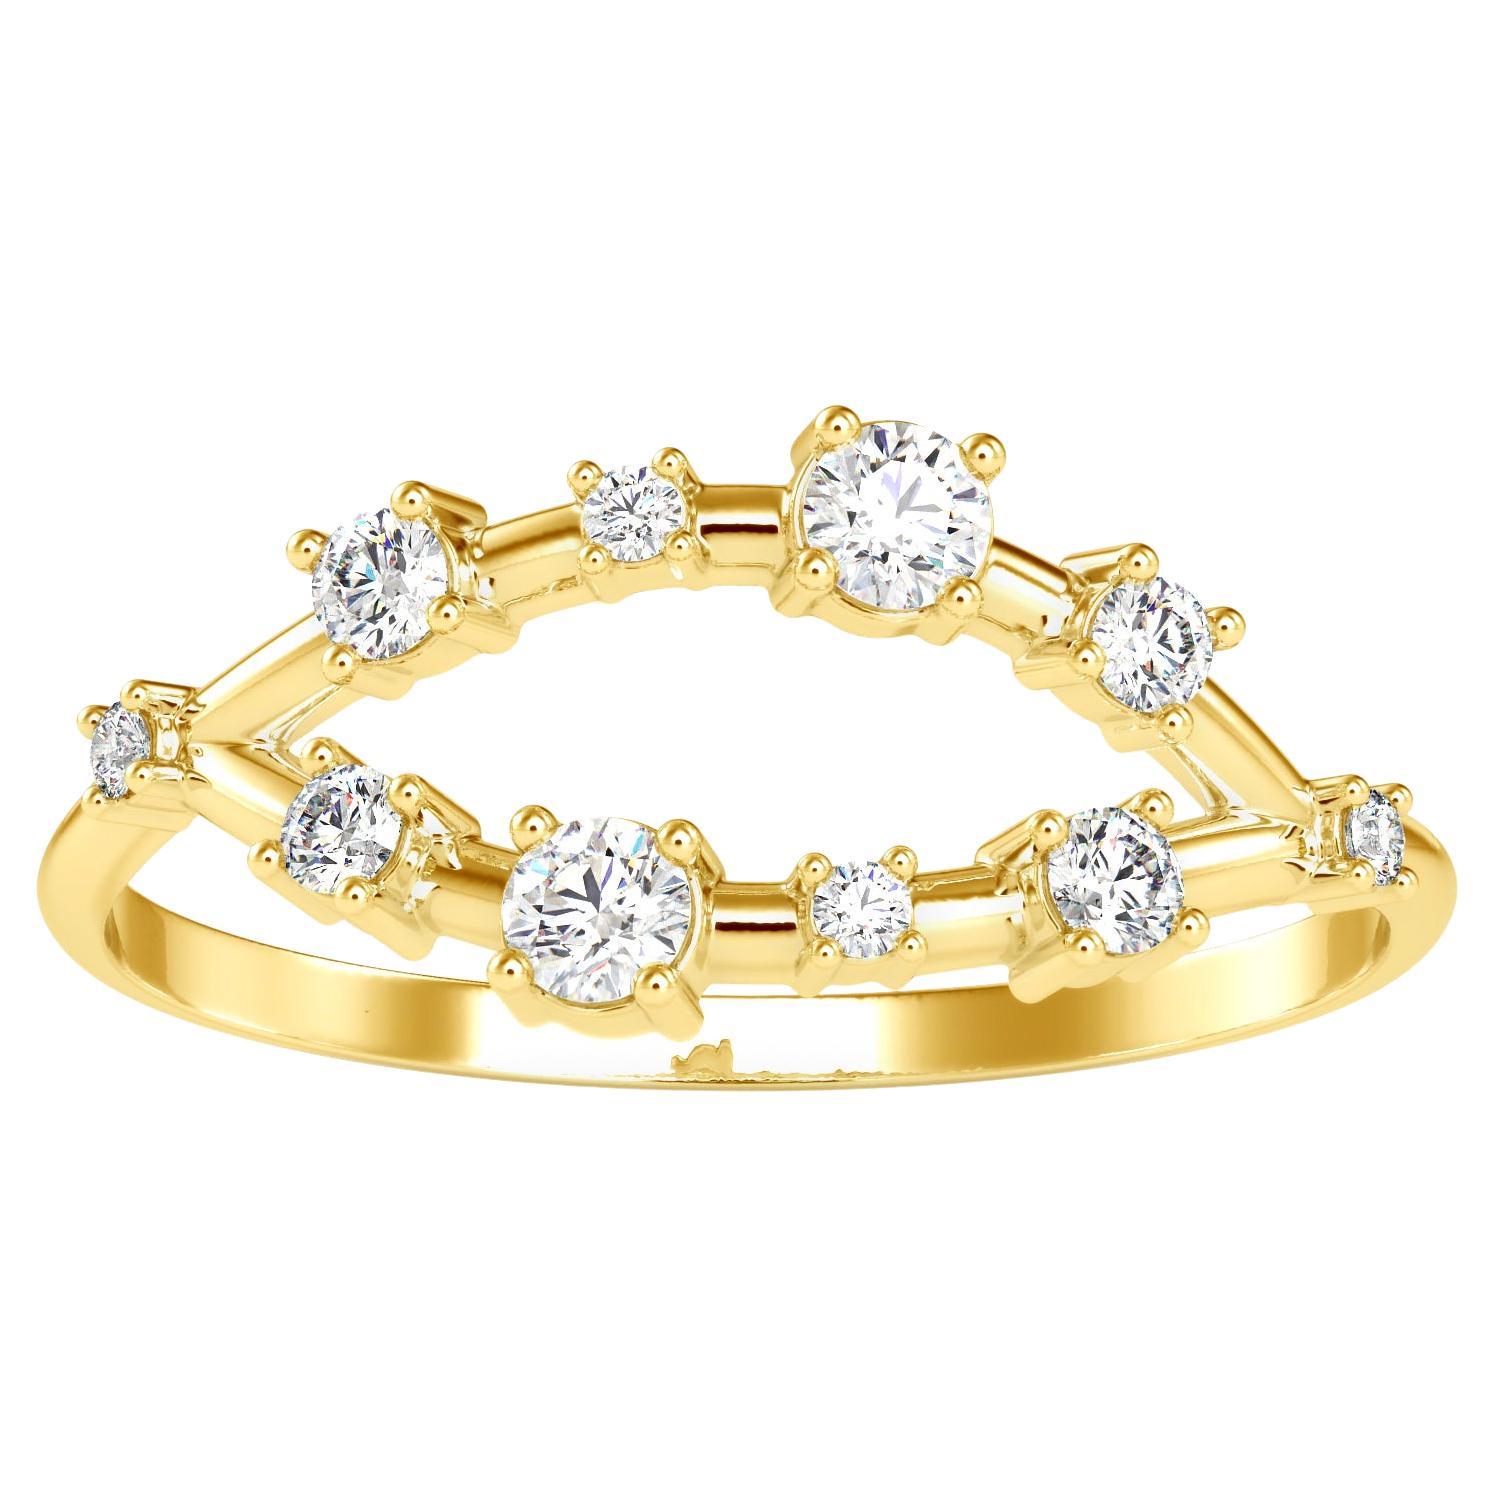 0.25 Carat Diamond 14K Yellow Gold Ring